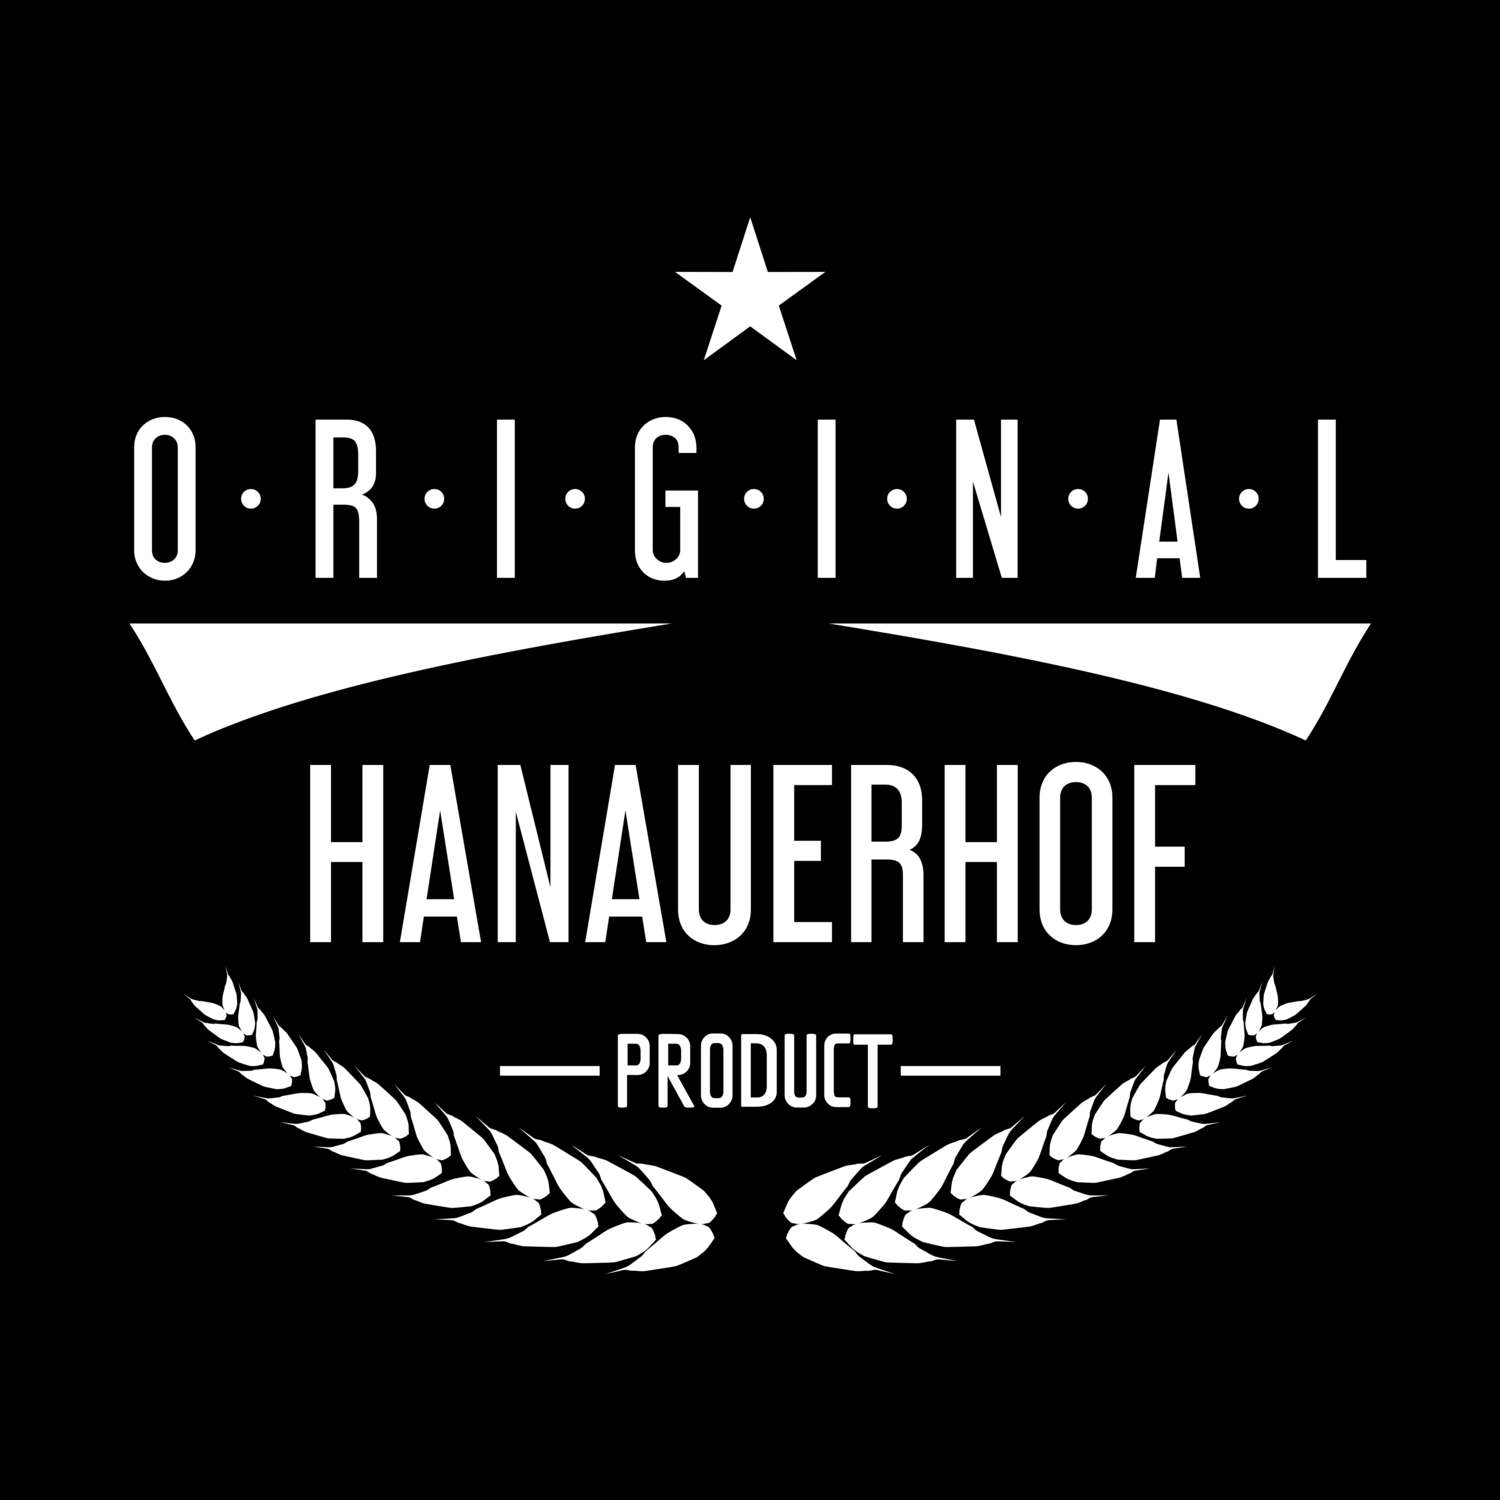 Hanauerhof T-Shirt »Original Product«